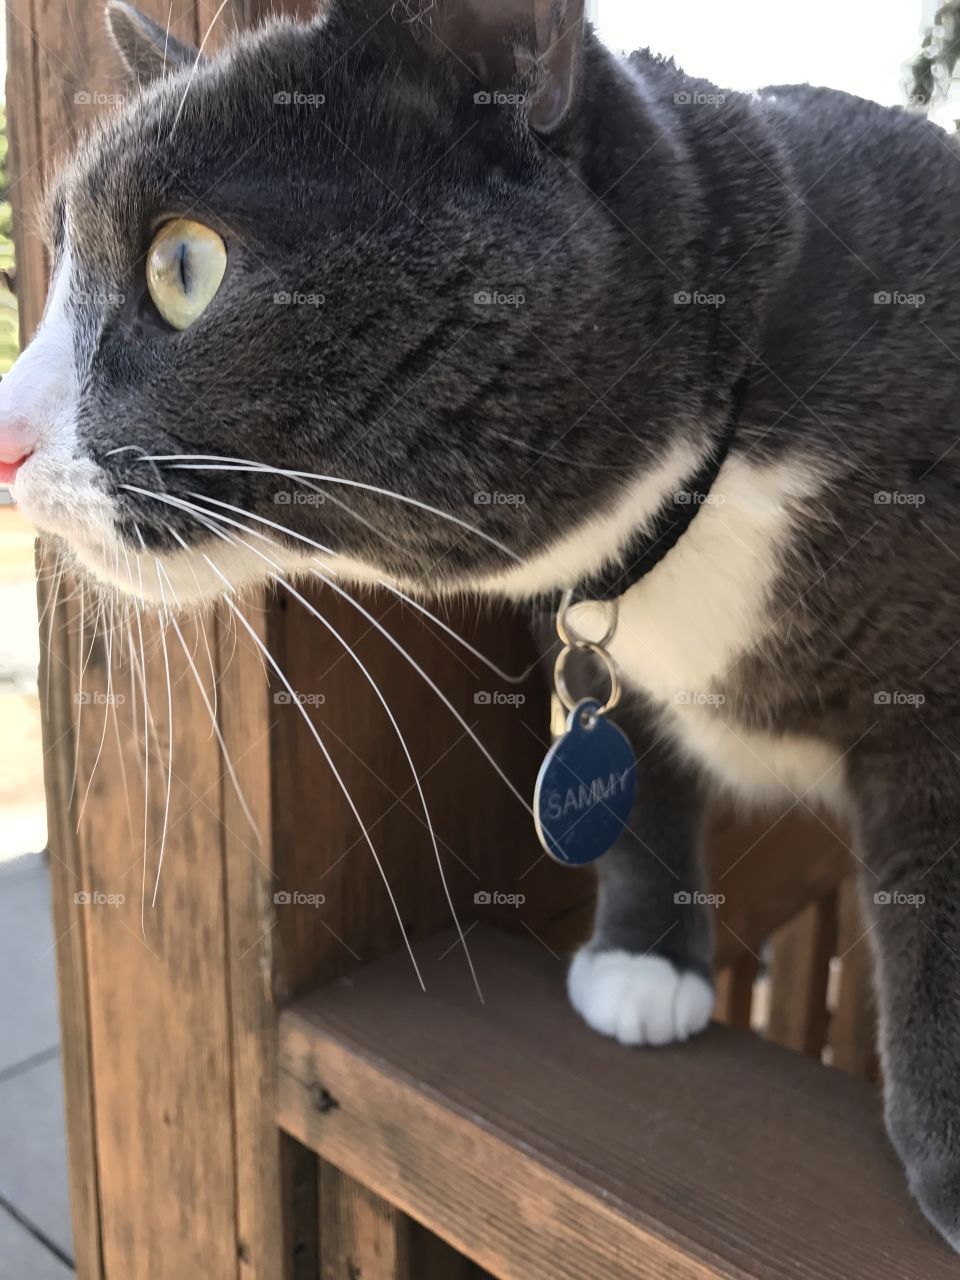 Sammy enjoying the fresh air